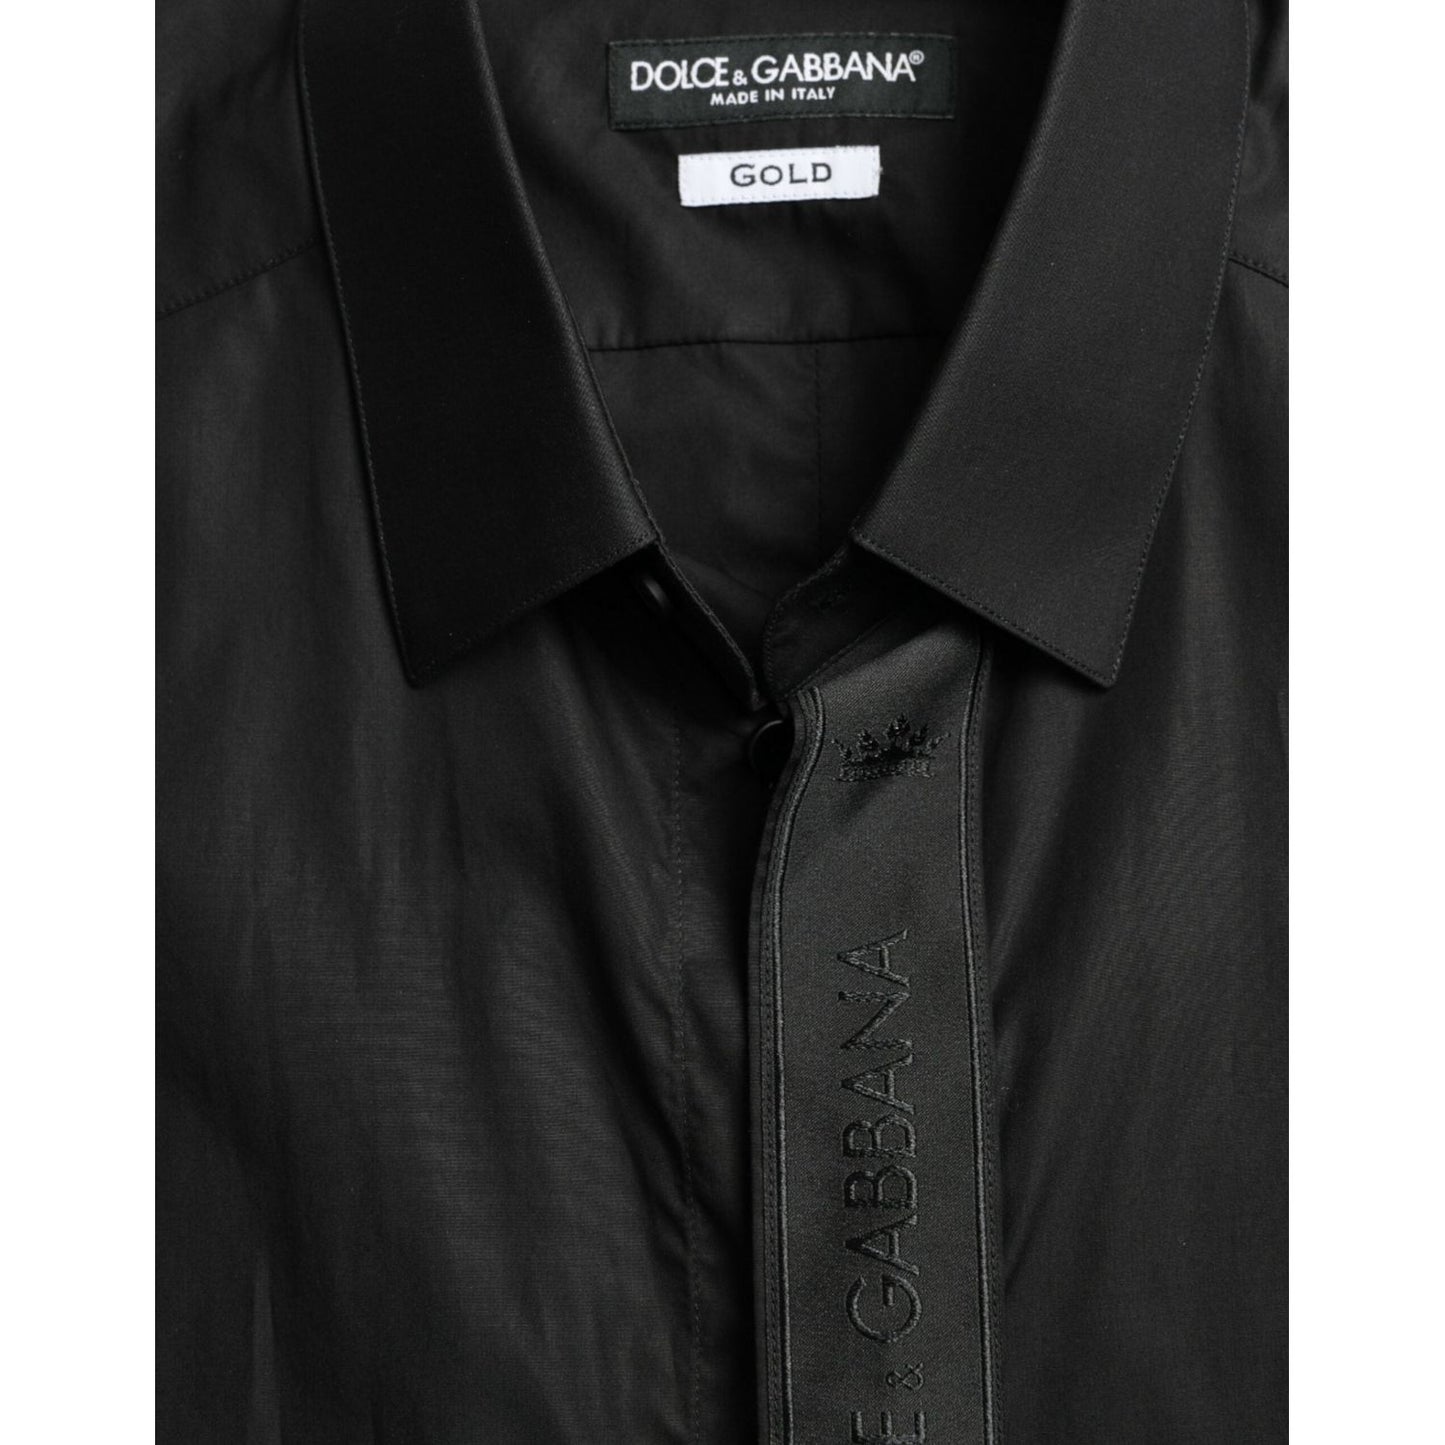 Dolce & Gabbana Elegant Black Slim Fit Dress Shirt black-cotton-logo-formal-gold-dress-shirt